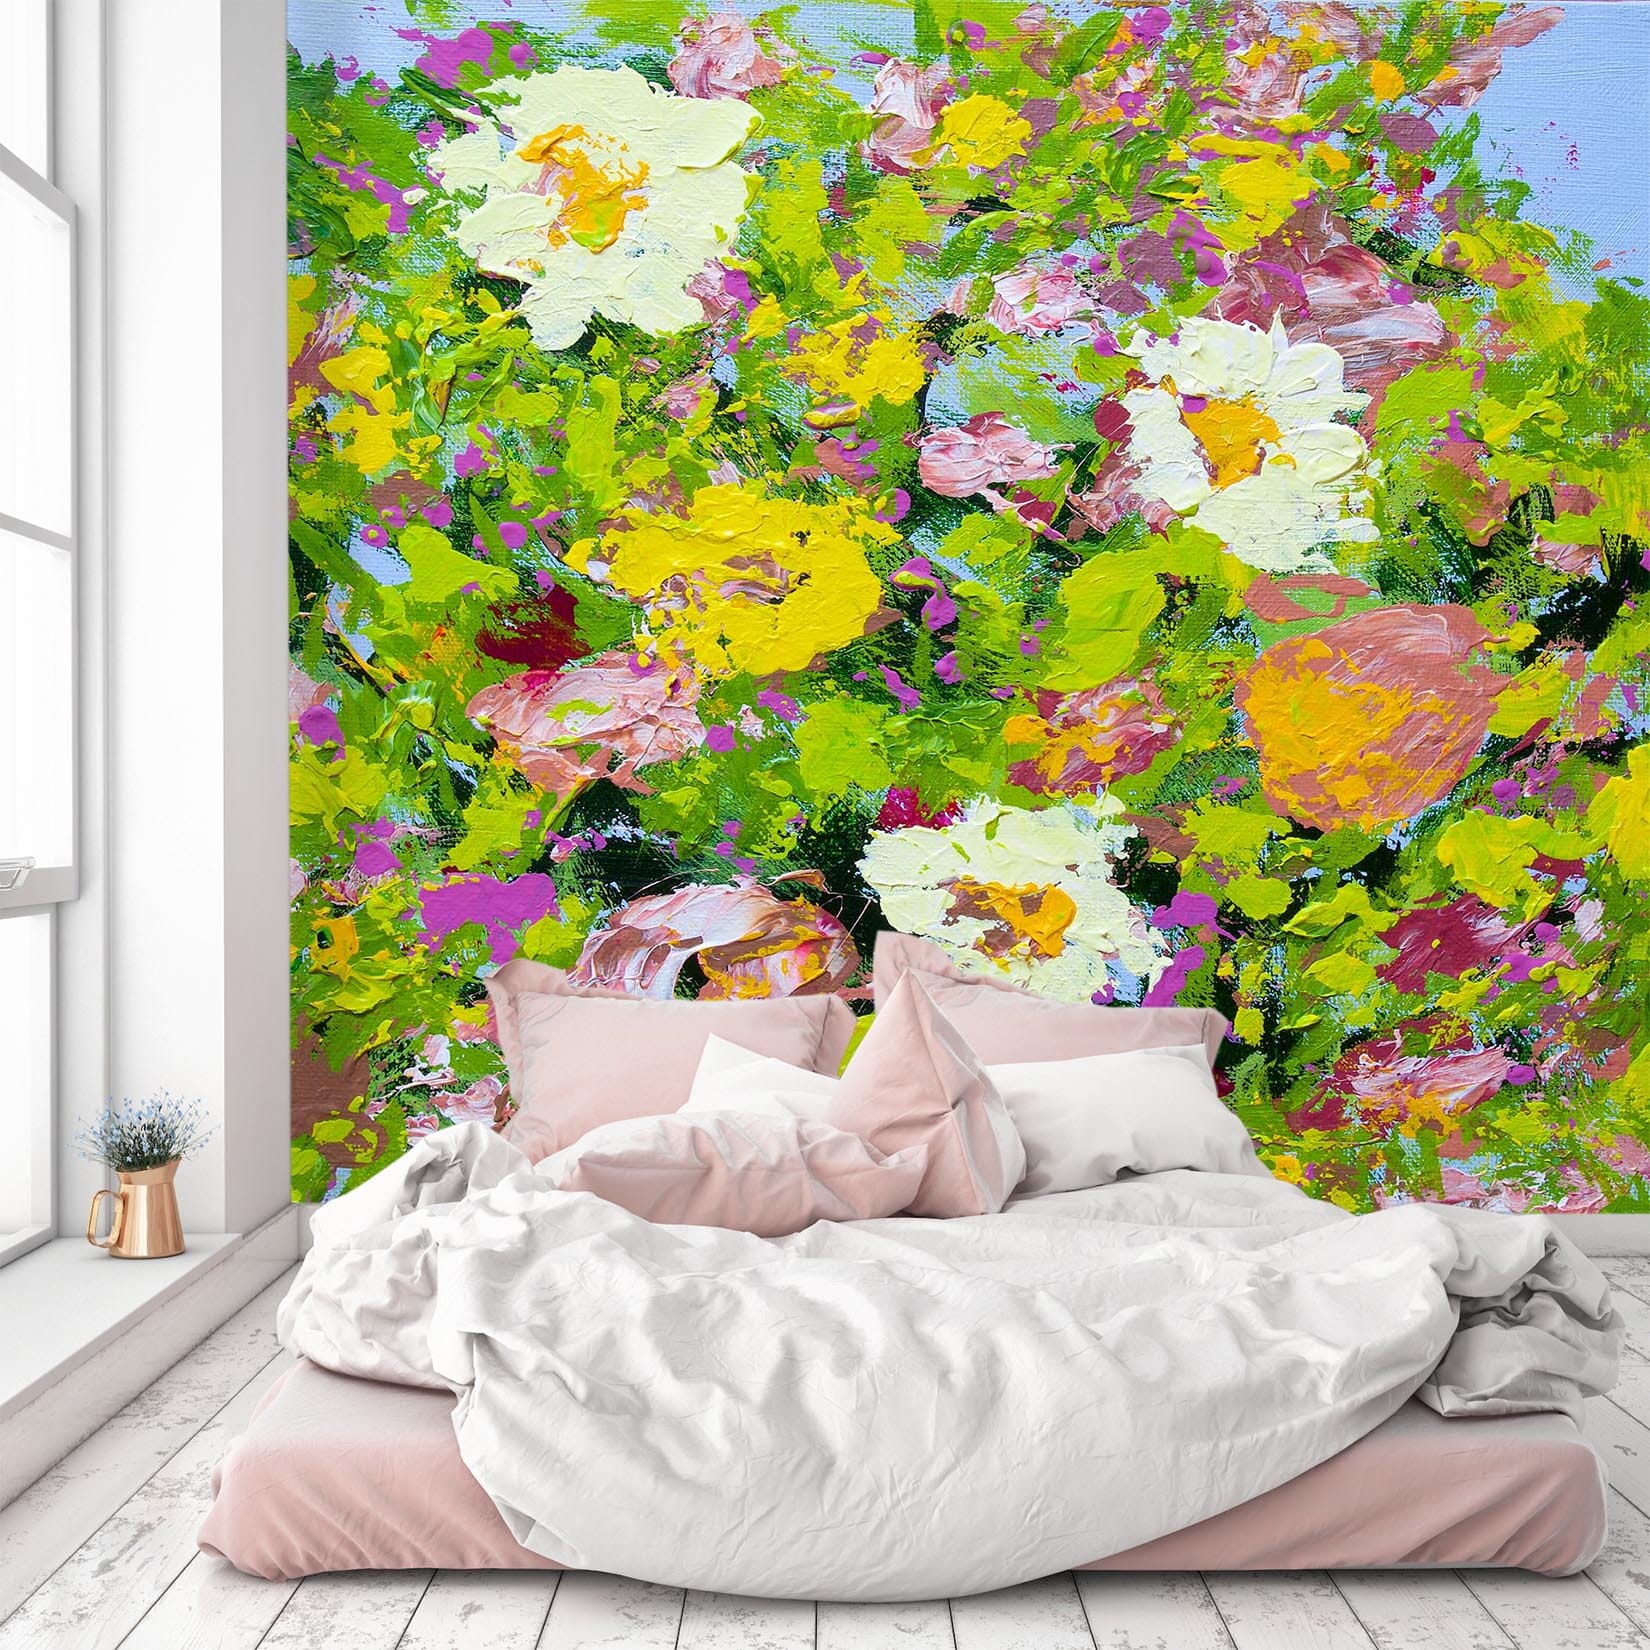 3D Oil Painting Flowers 115 Allan P. Friedlander Wall Mural Wall Murals Wallpaper AJ Wallpaper 2 